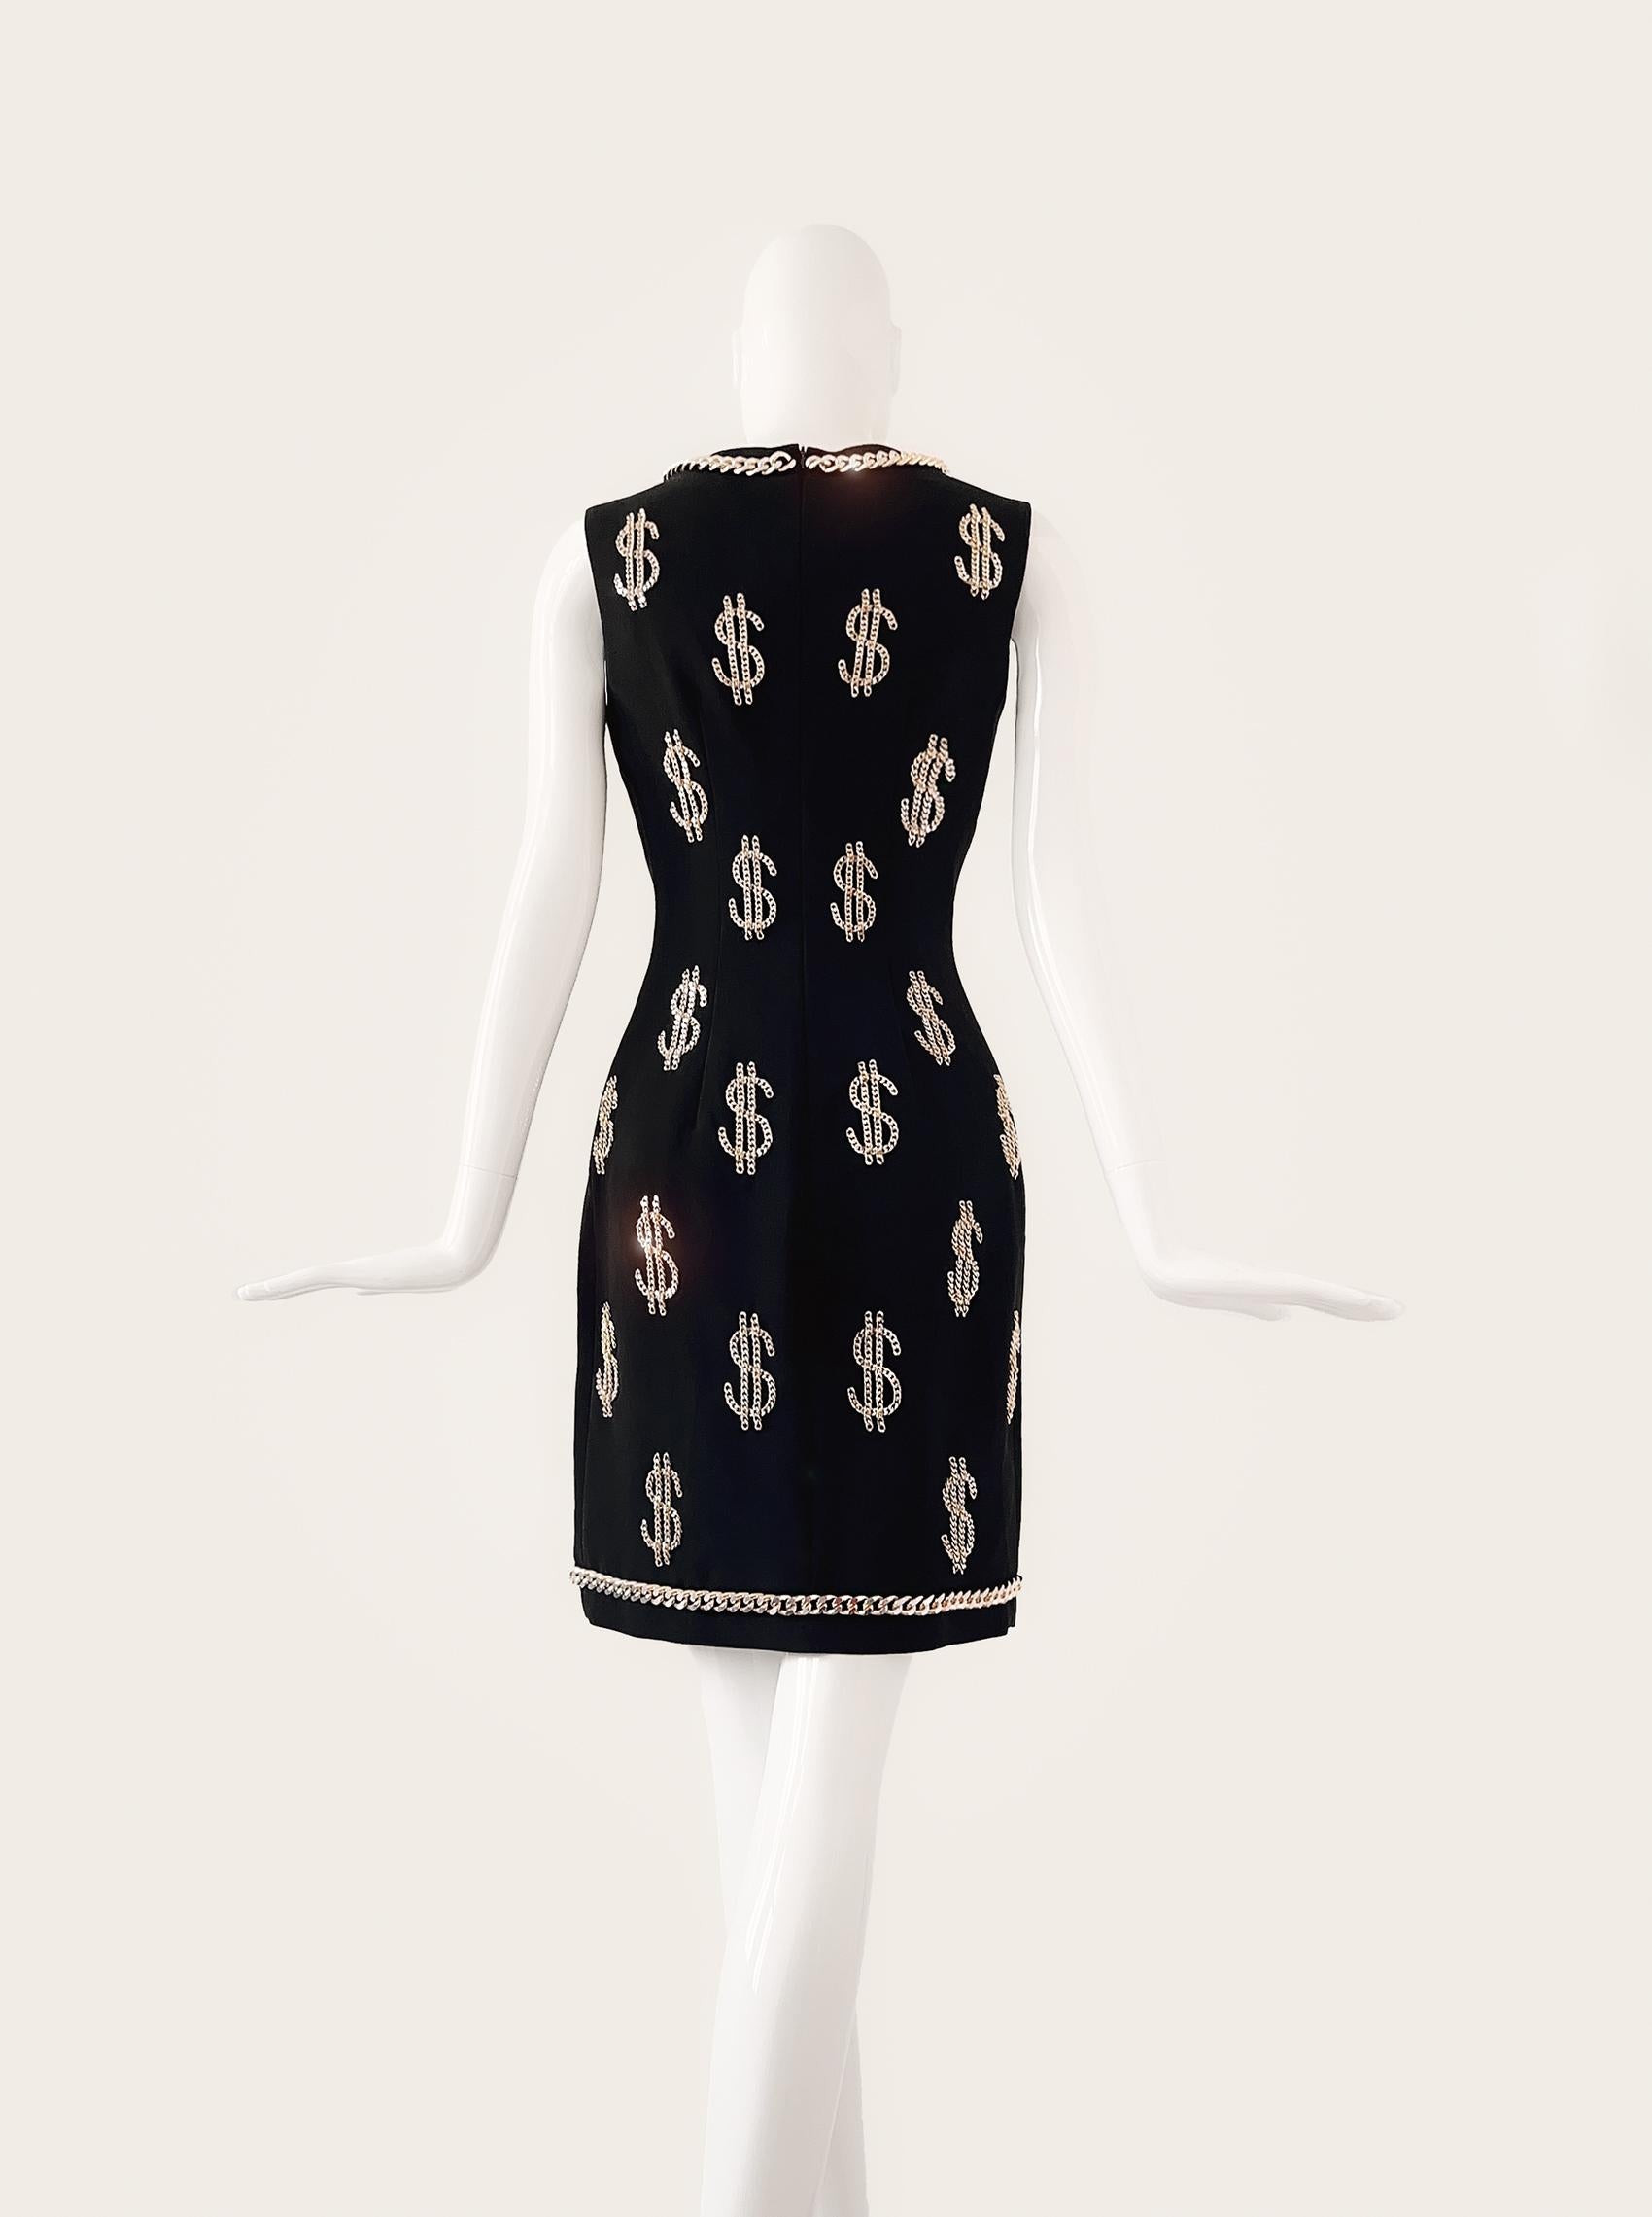 Noir Iconique MOSCHINO Couture Dollar Sign Ensembe Black Dress Jacket Gold Chain Set  en vente